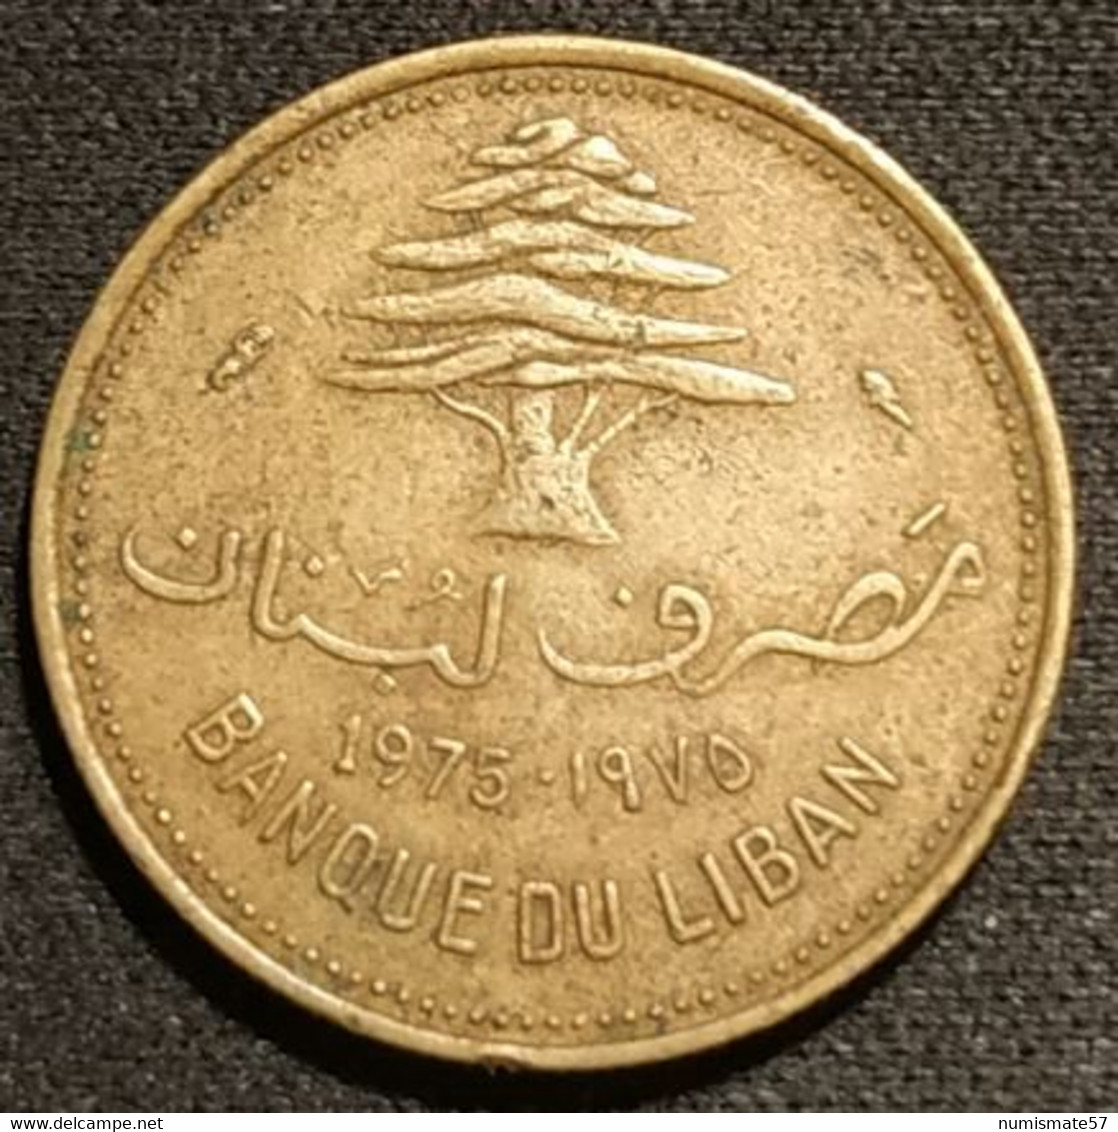 LIBAN - LEBANON - 10 PIASTRES 1975 - KM 26 - Libanon